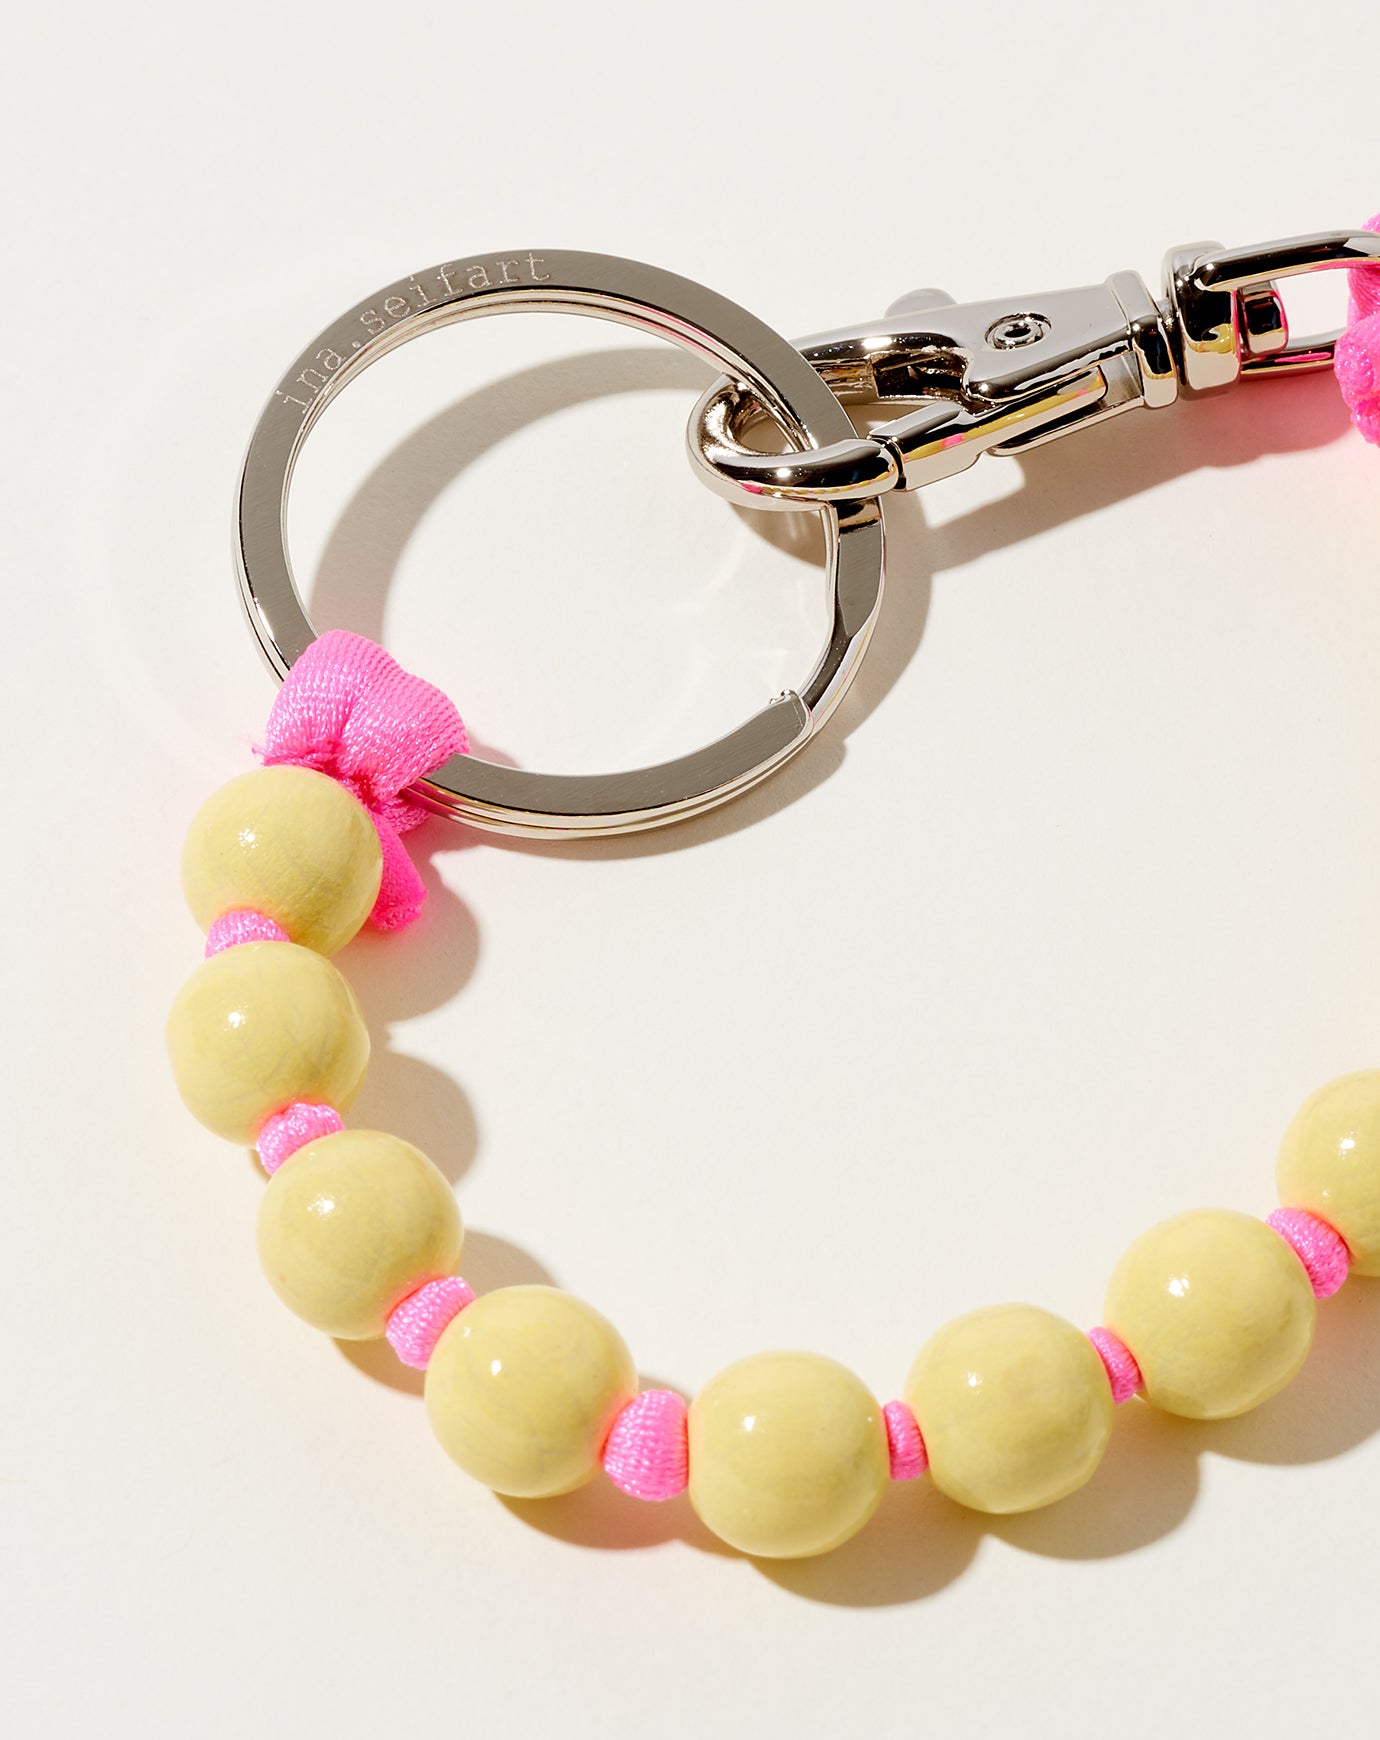 Ina Seifart Perlen Short Keyholder in Pastel Yellow on Pink